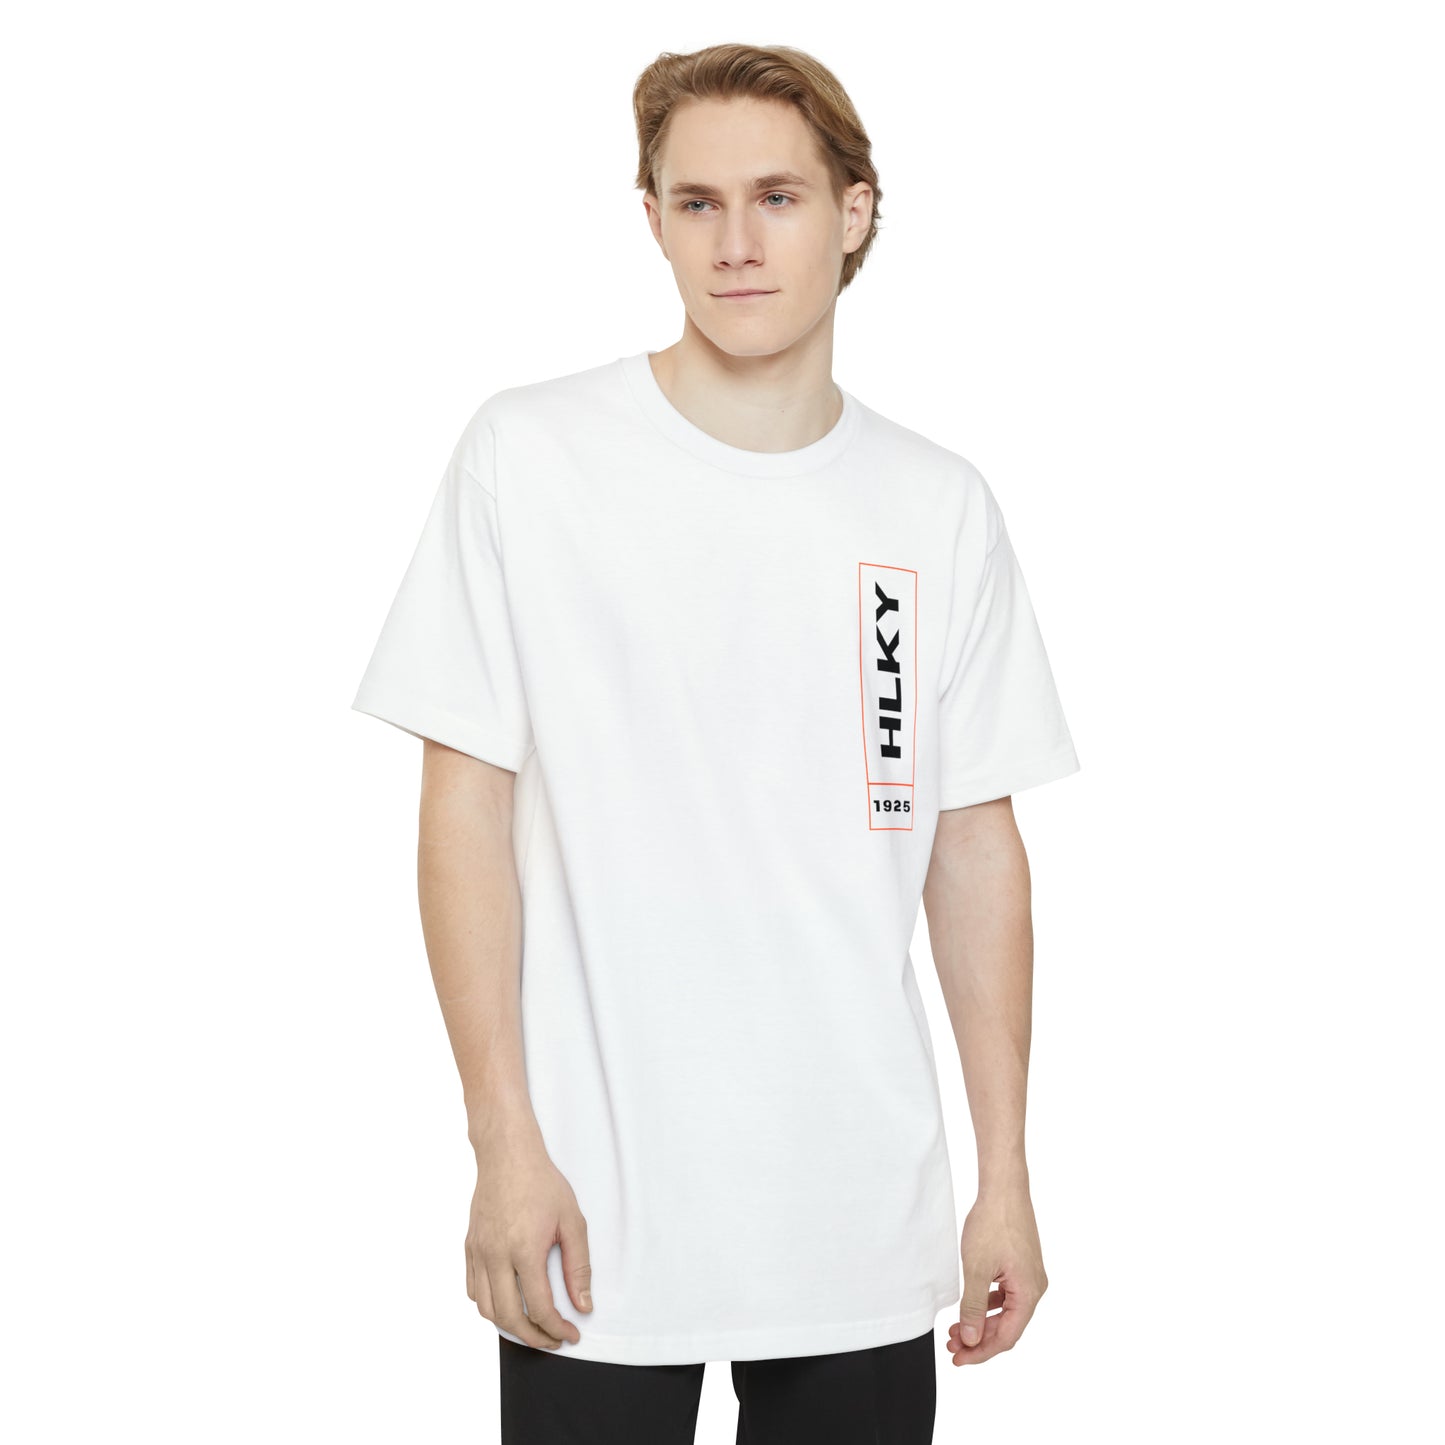 Herrington Lake "Sleek" Tall Hanes Beefy-T® T-Shirt